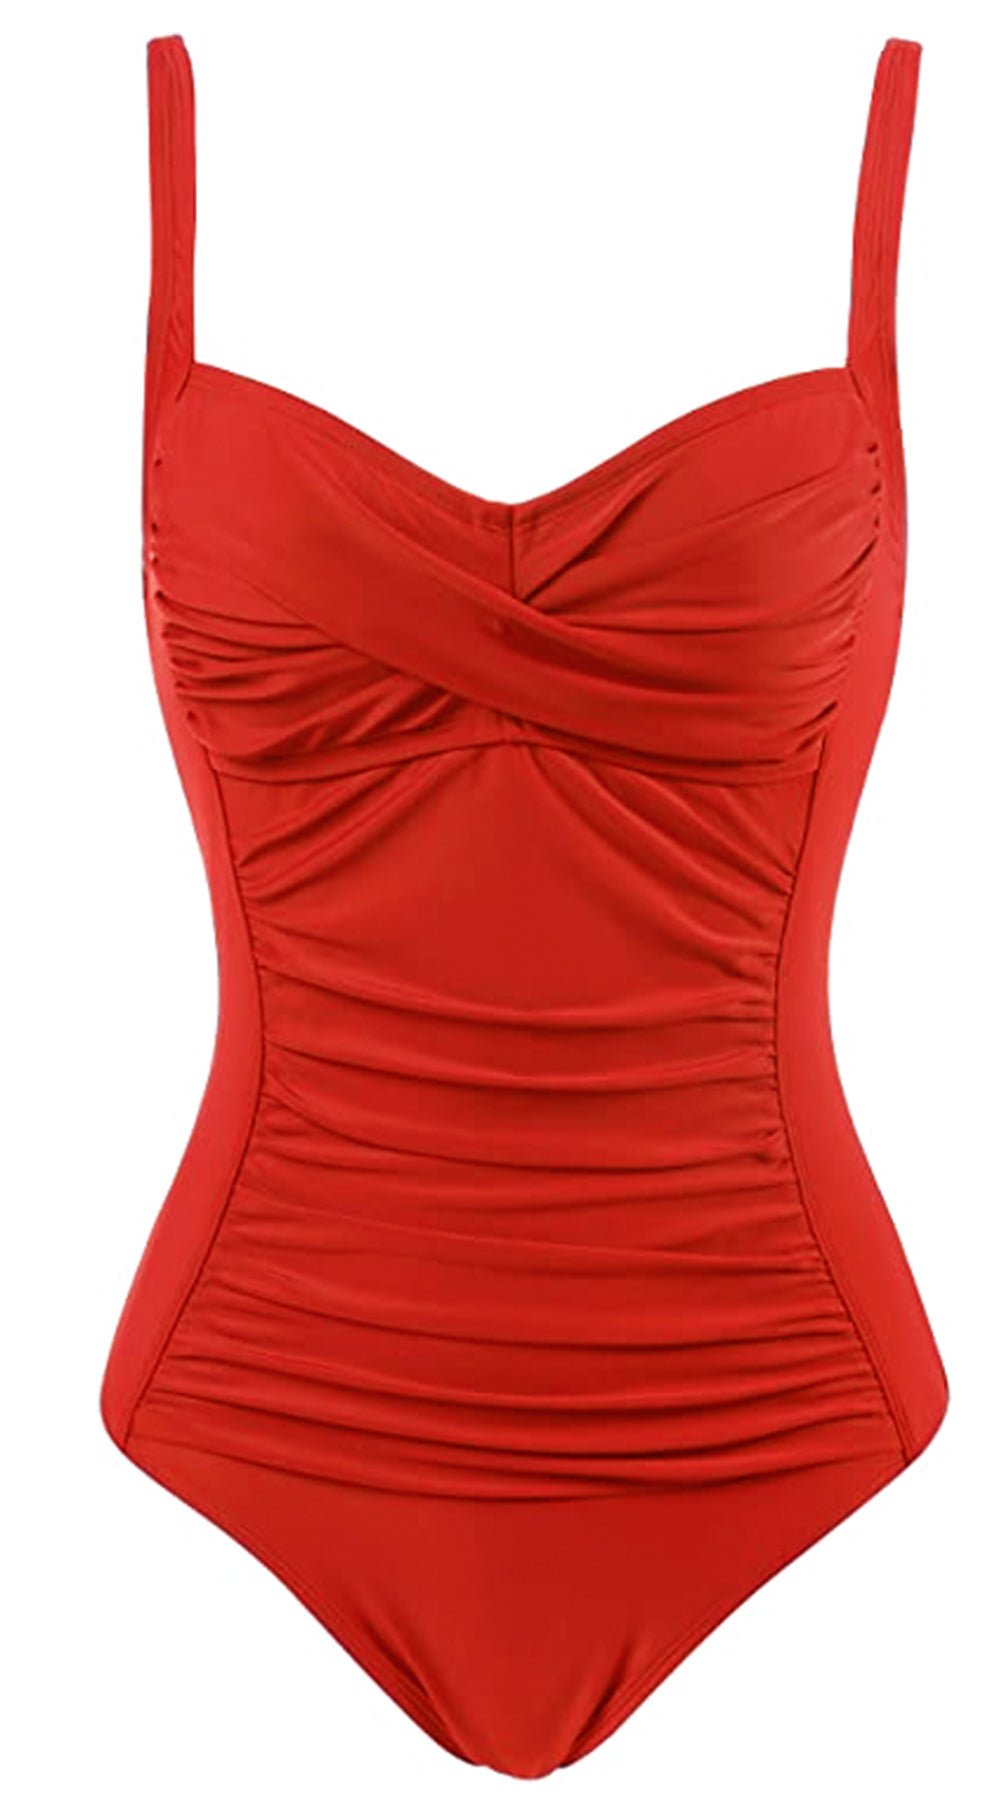 Essentials Basic Twist Suit (Red) - Bare Essentials
One Piece Swimsuits